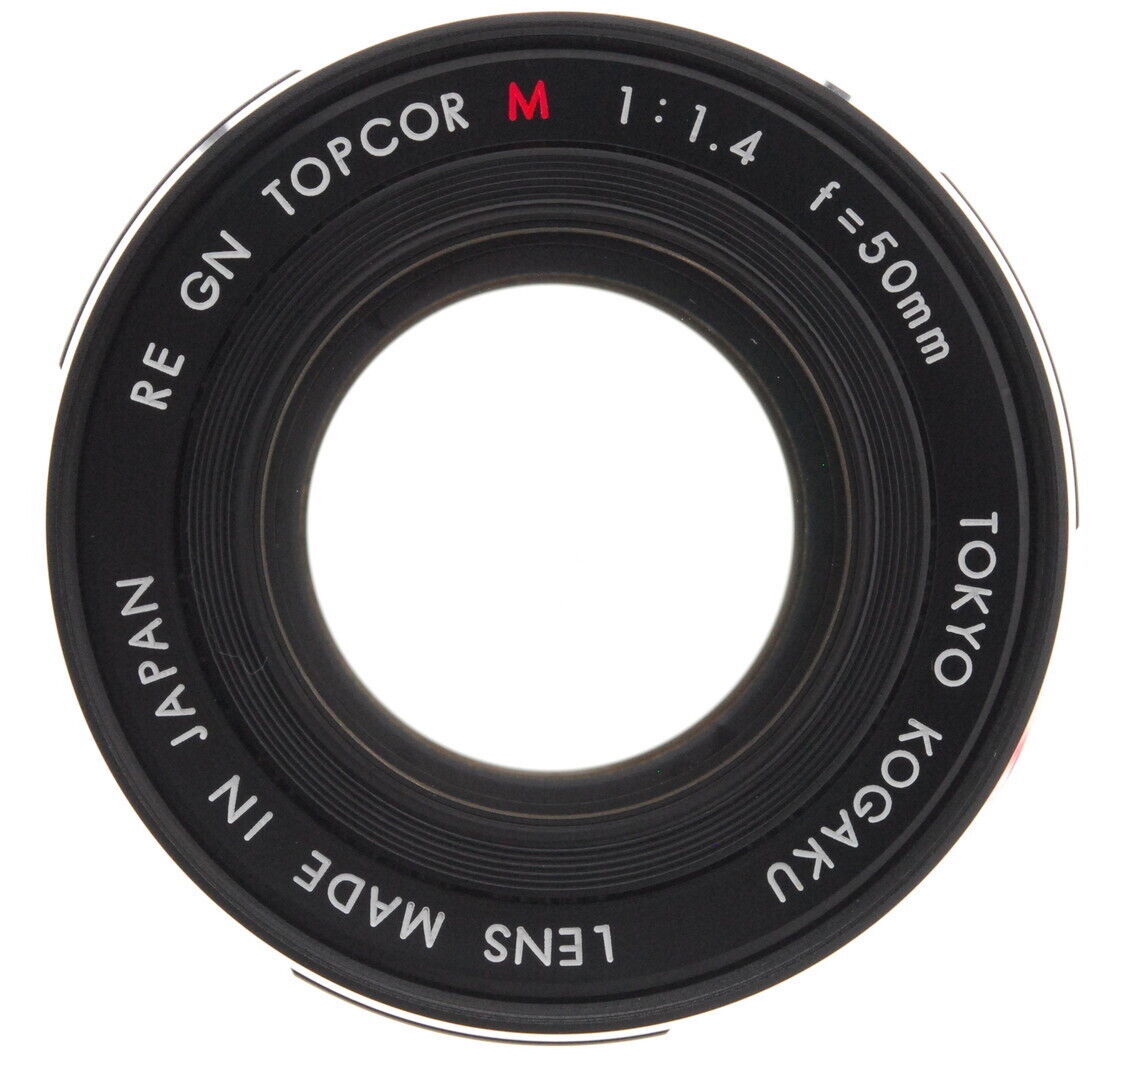 Tokyo Kogaku RE GN Topcor M 50mm F/1.4 | LENS-DB.COM